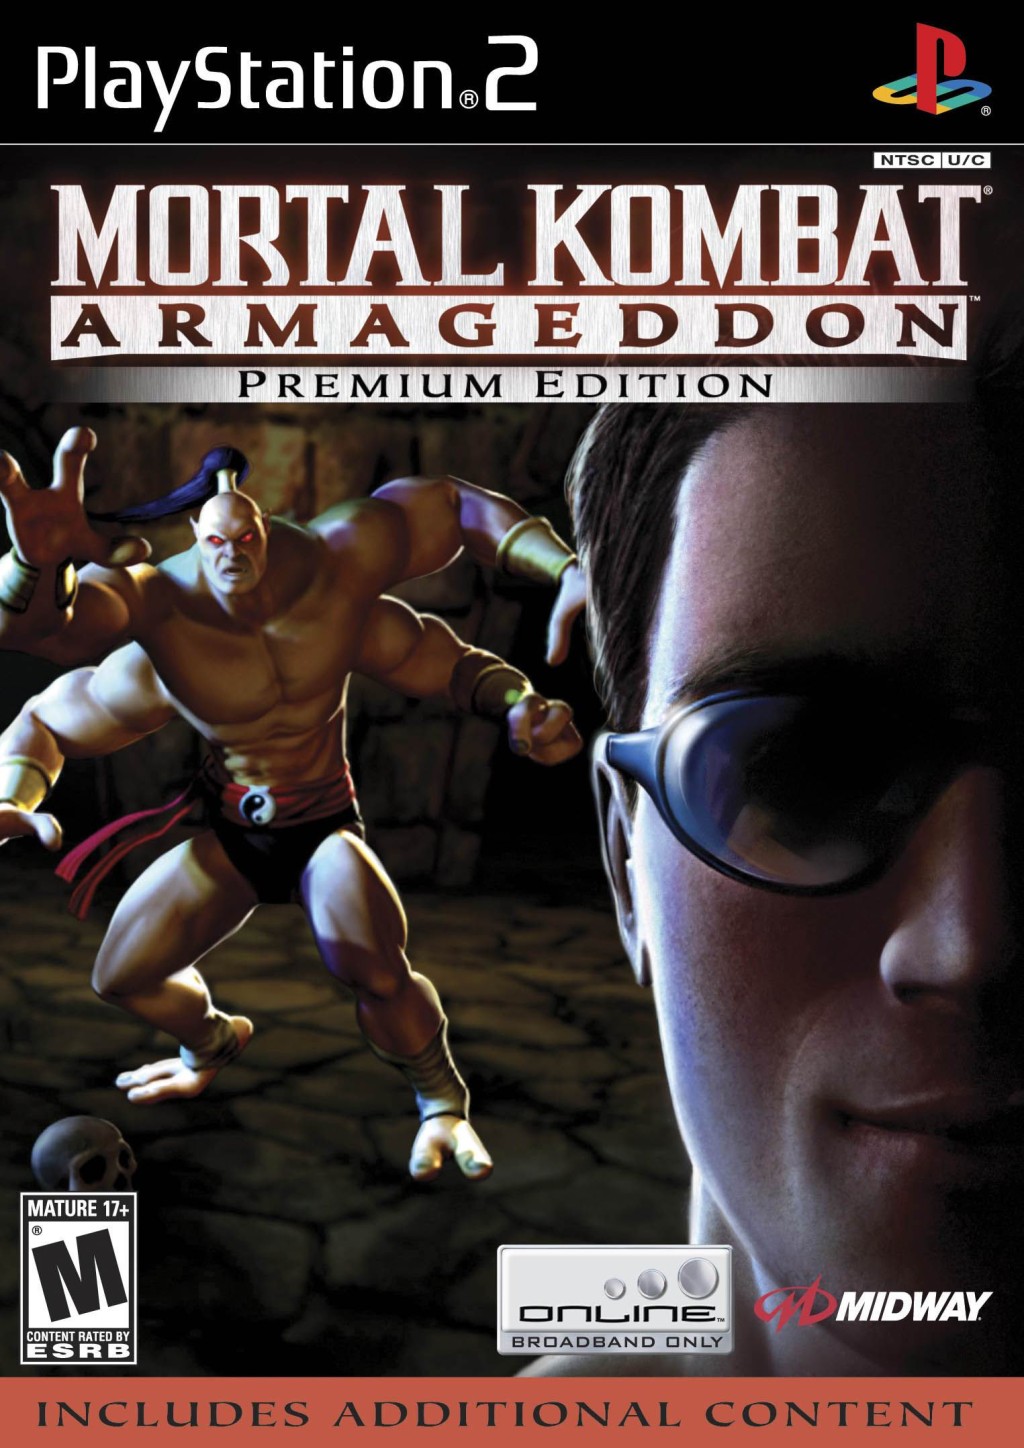 Mortal kombat 4 ps1 download iso torrent download